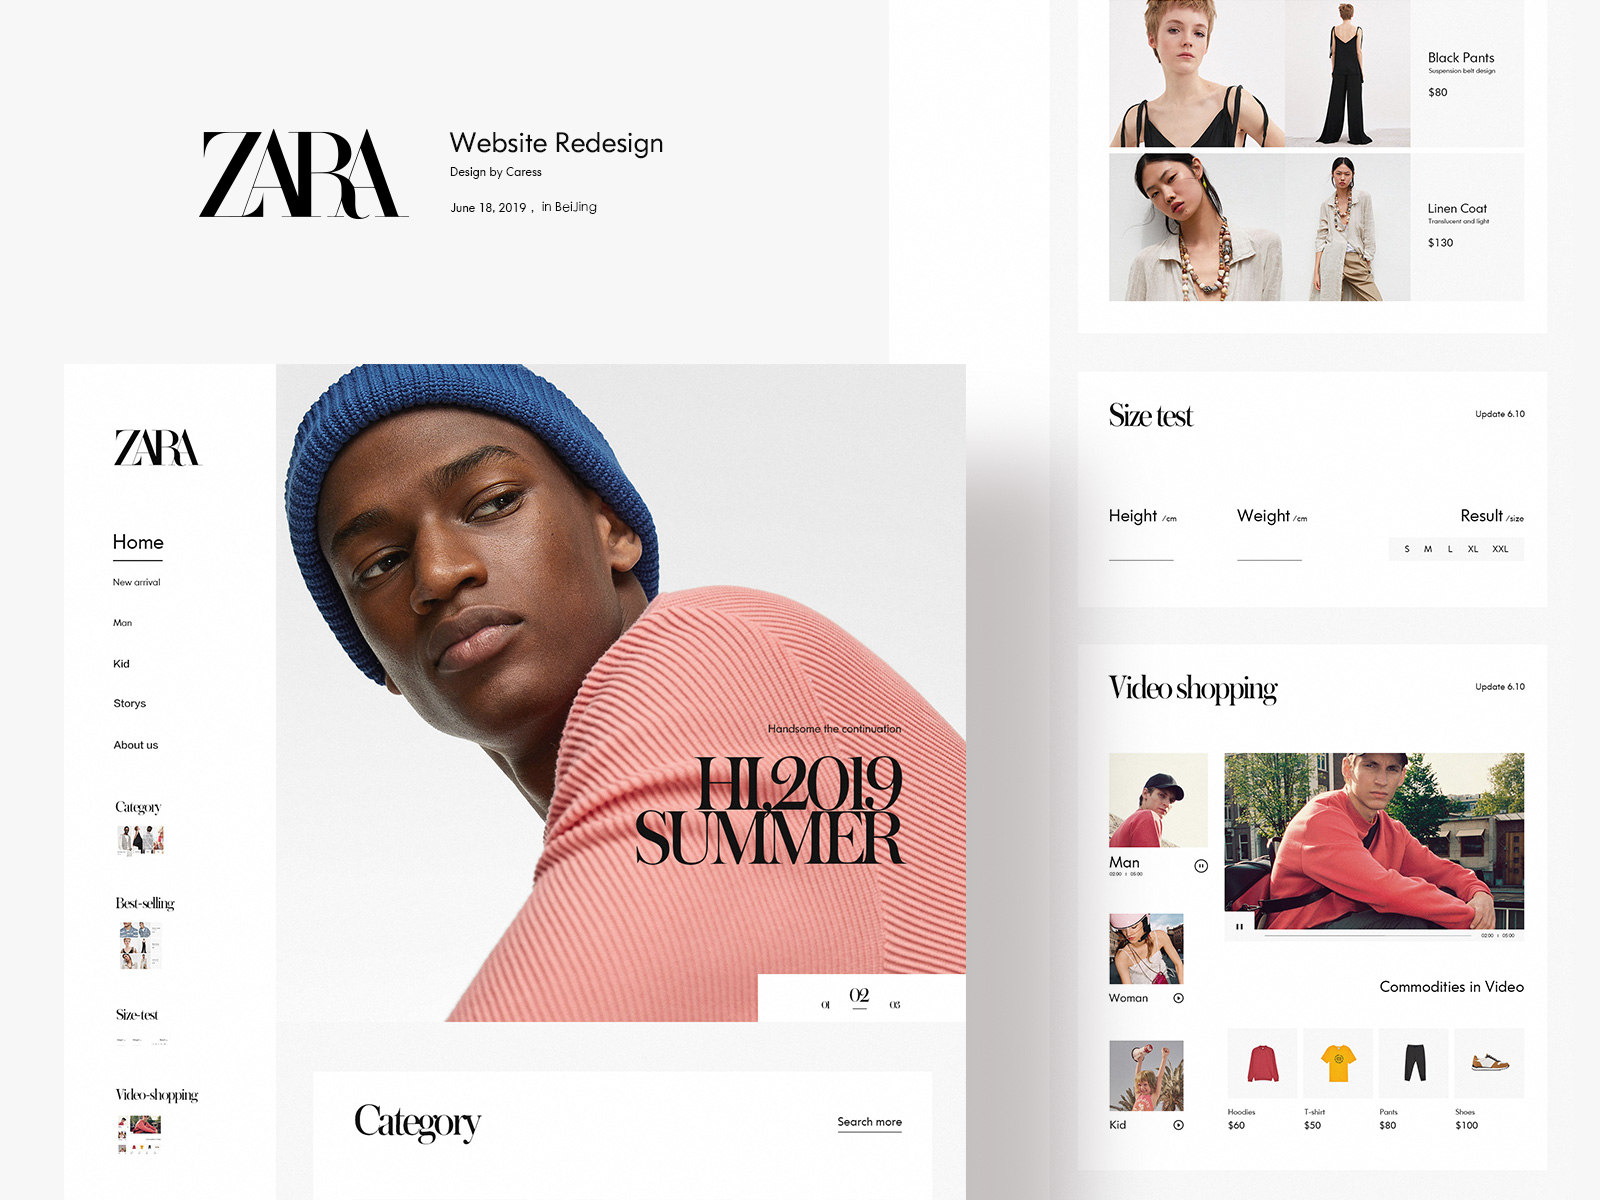 Zara Website Redesign by Caress for BestDream on Dribbble